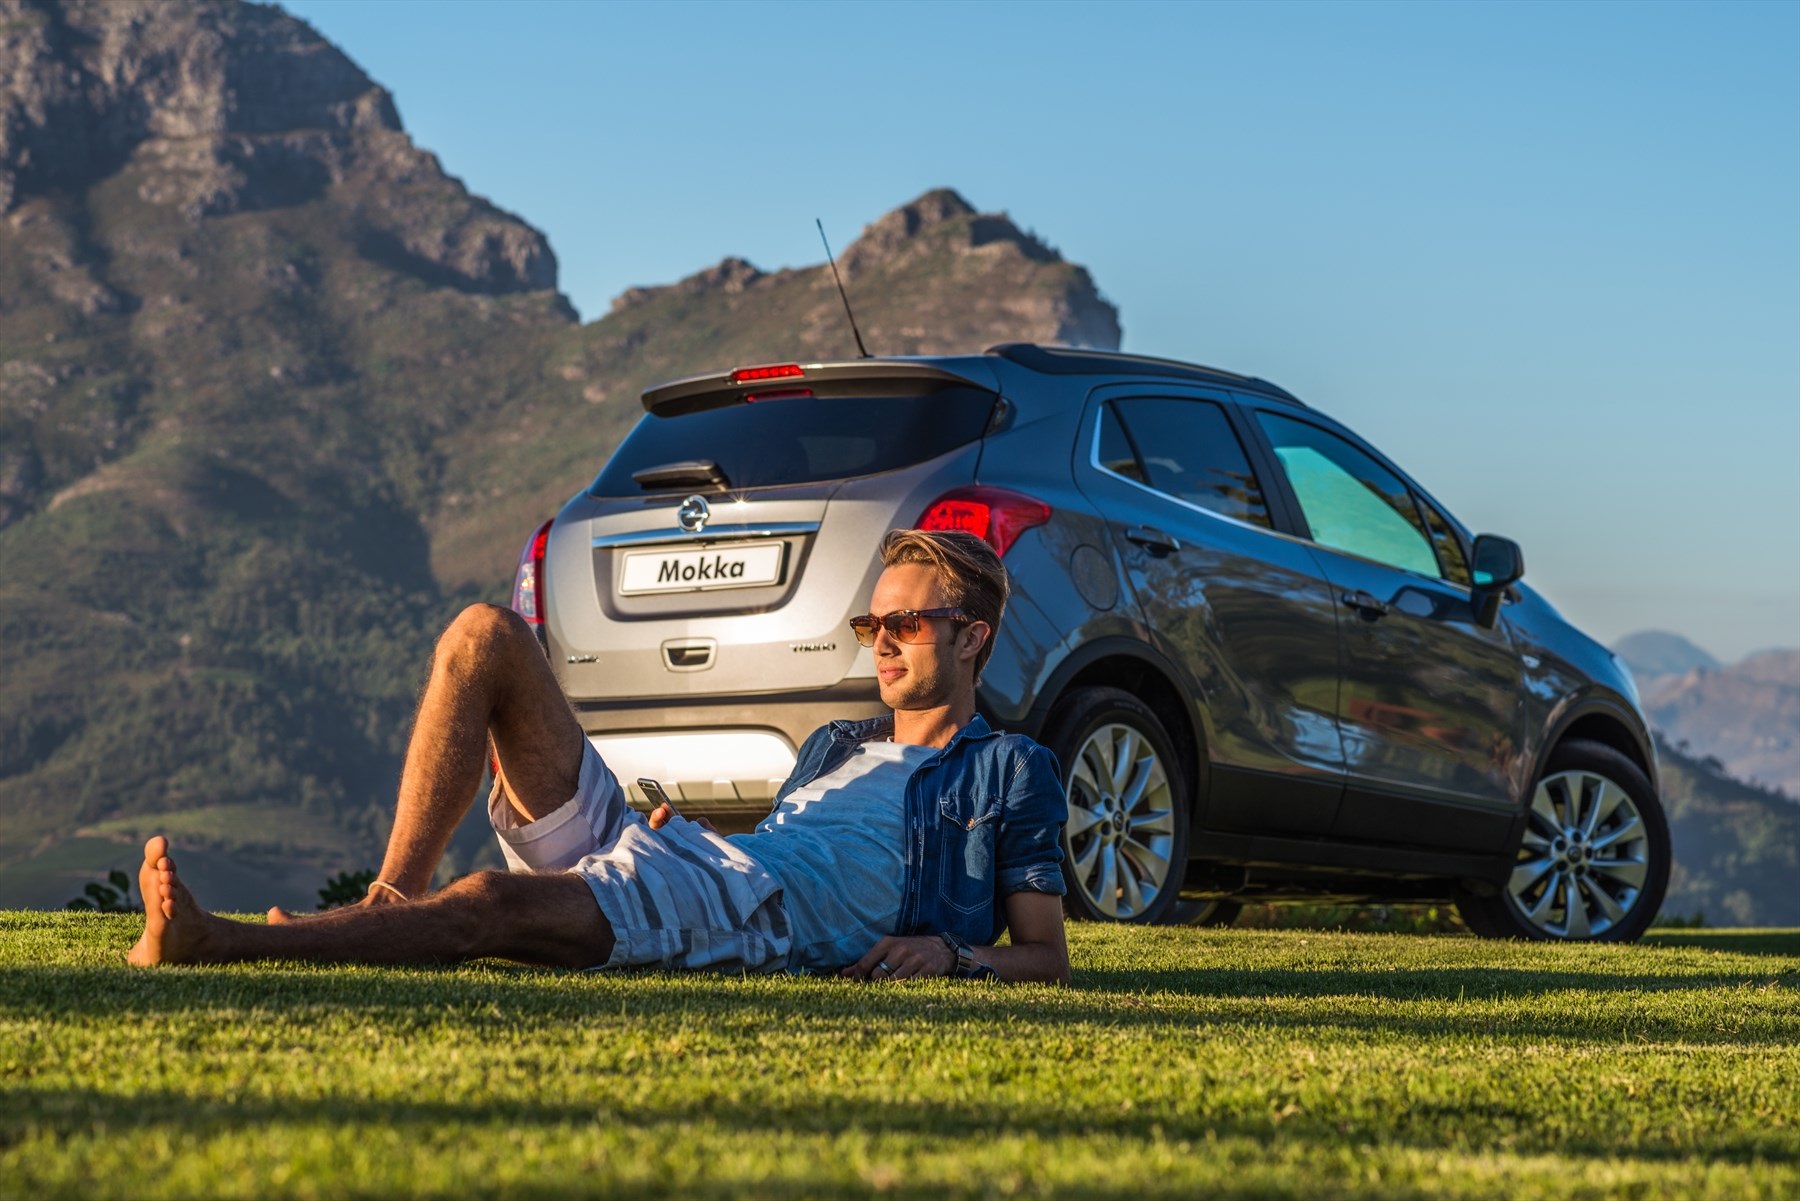 <b>NEW MOKKA IN SA:</b> The new Mokka SUV completes a trio of new Opels (Adam and Corsa) in SA. <i>Image: Opel</i>